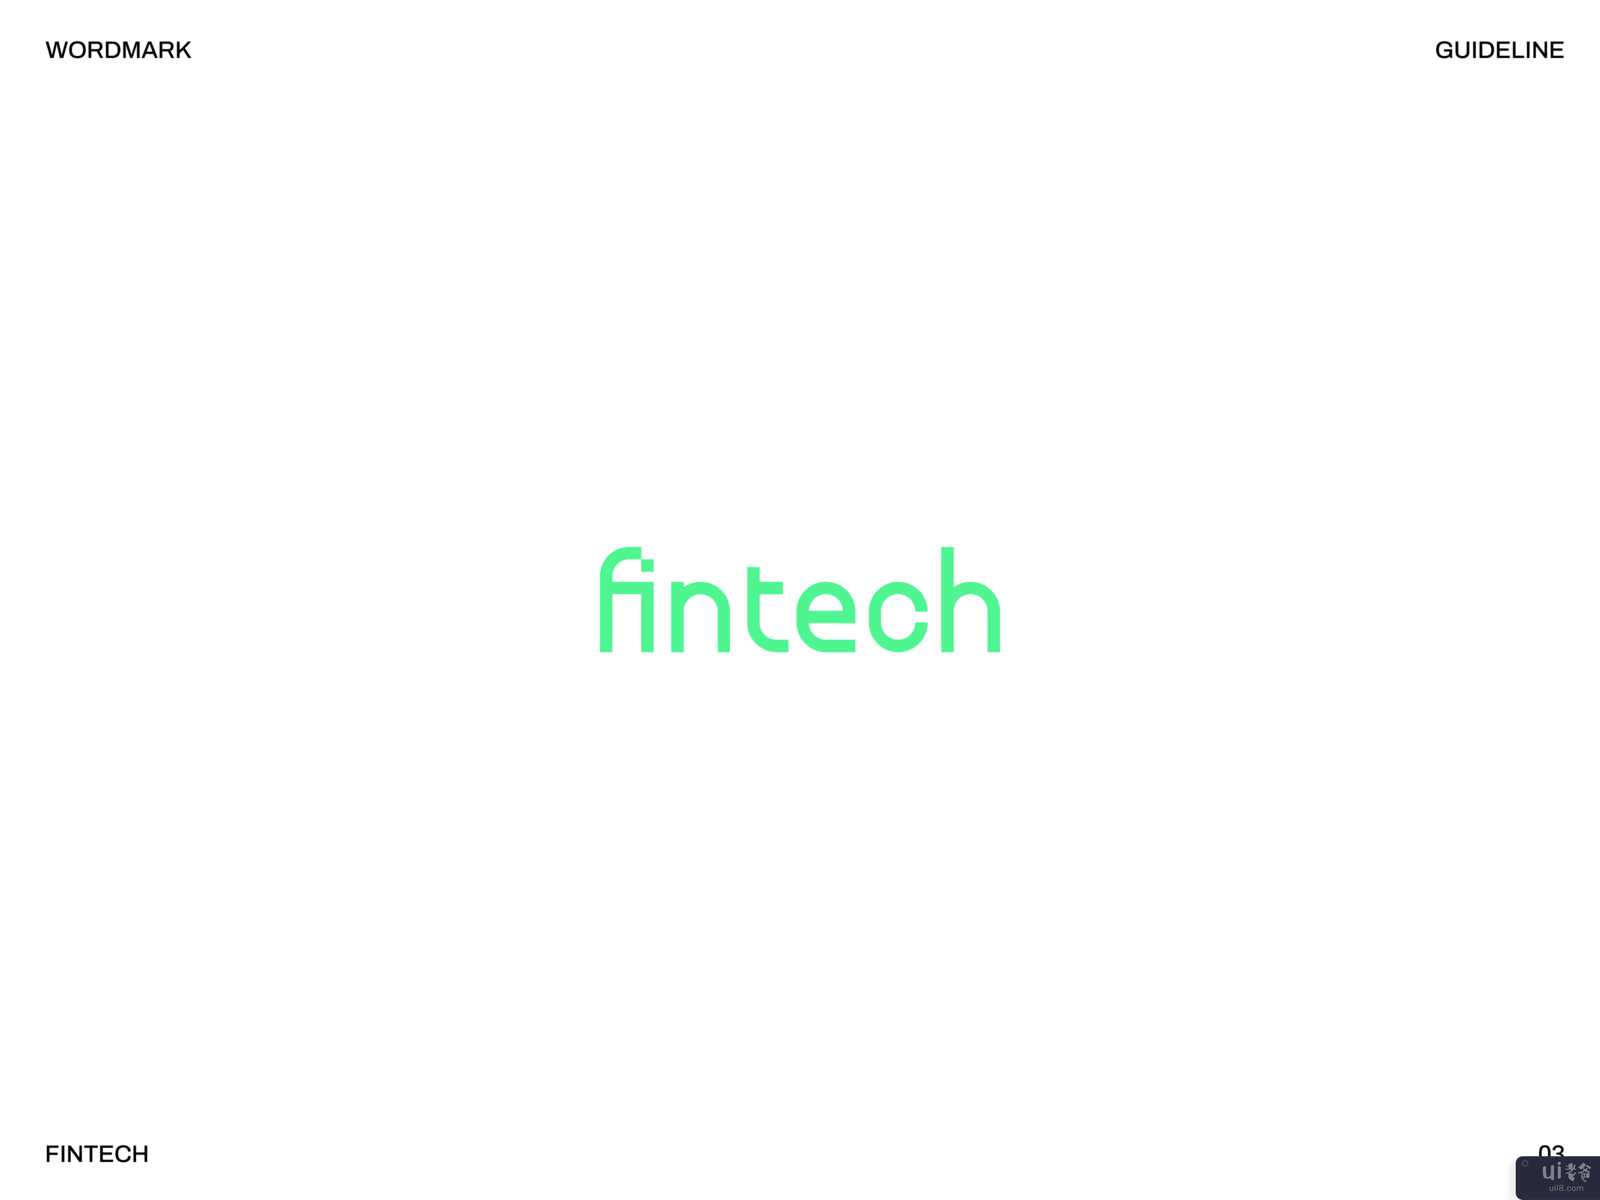 ft - 金融科技公司的品牌设计(ft - Brand Design for FinTech Company)插图2